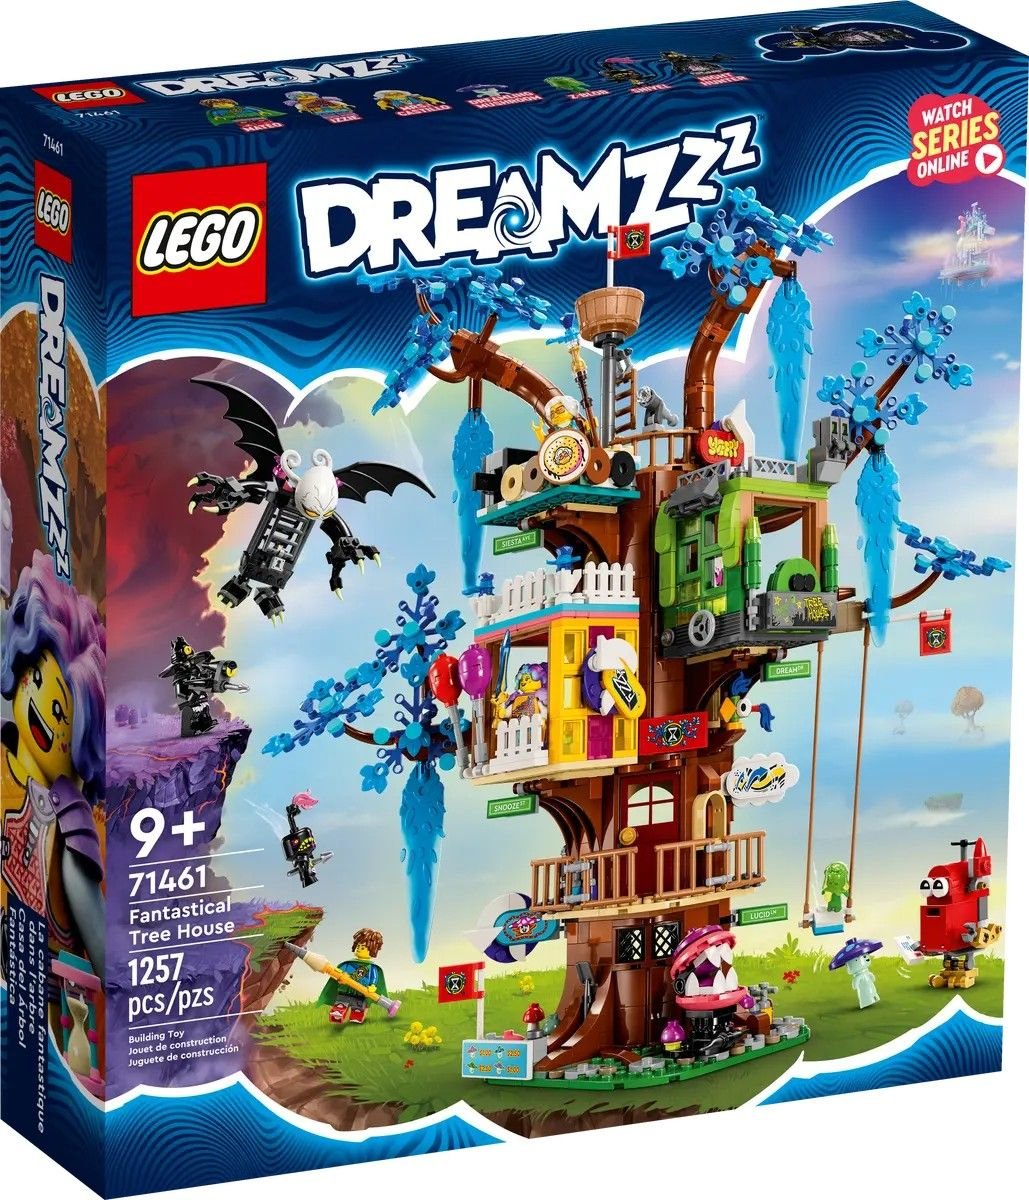 Fantastical Treehouse LEGO DREAMZZZ 71461